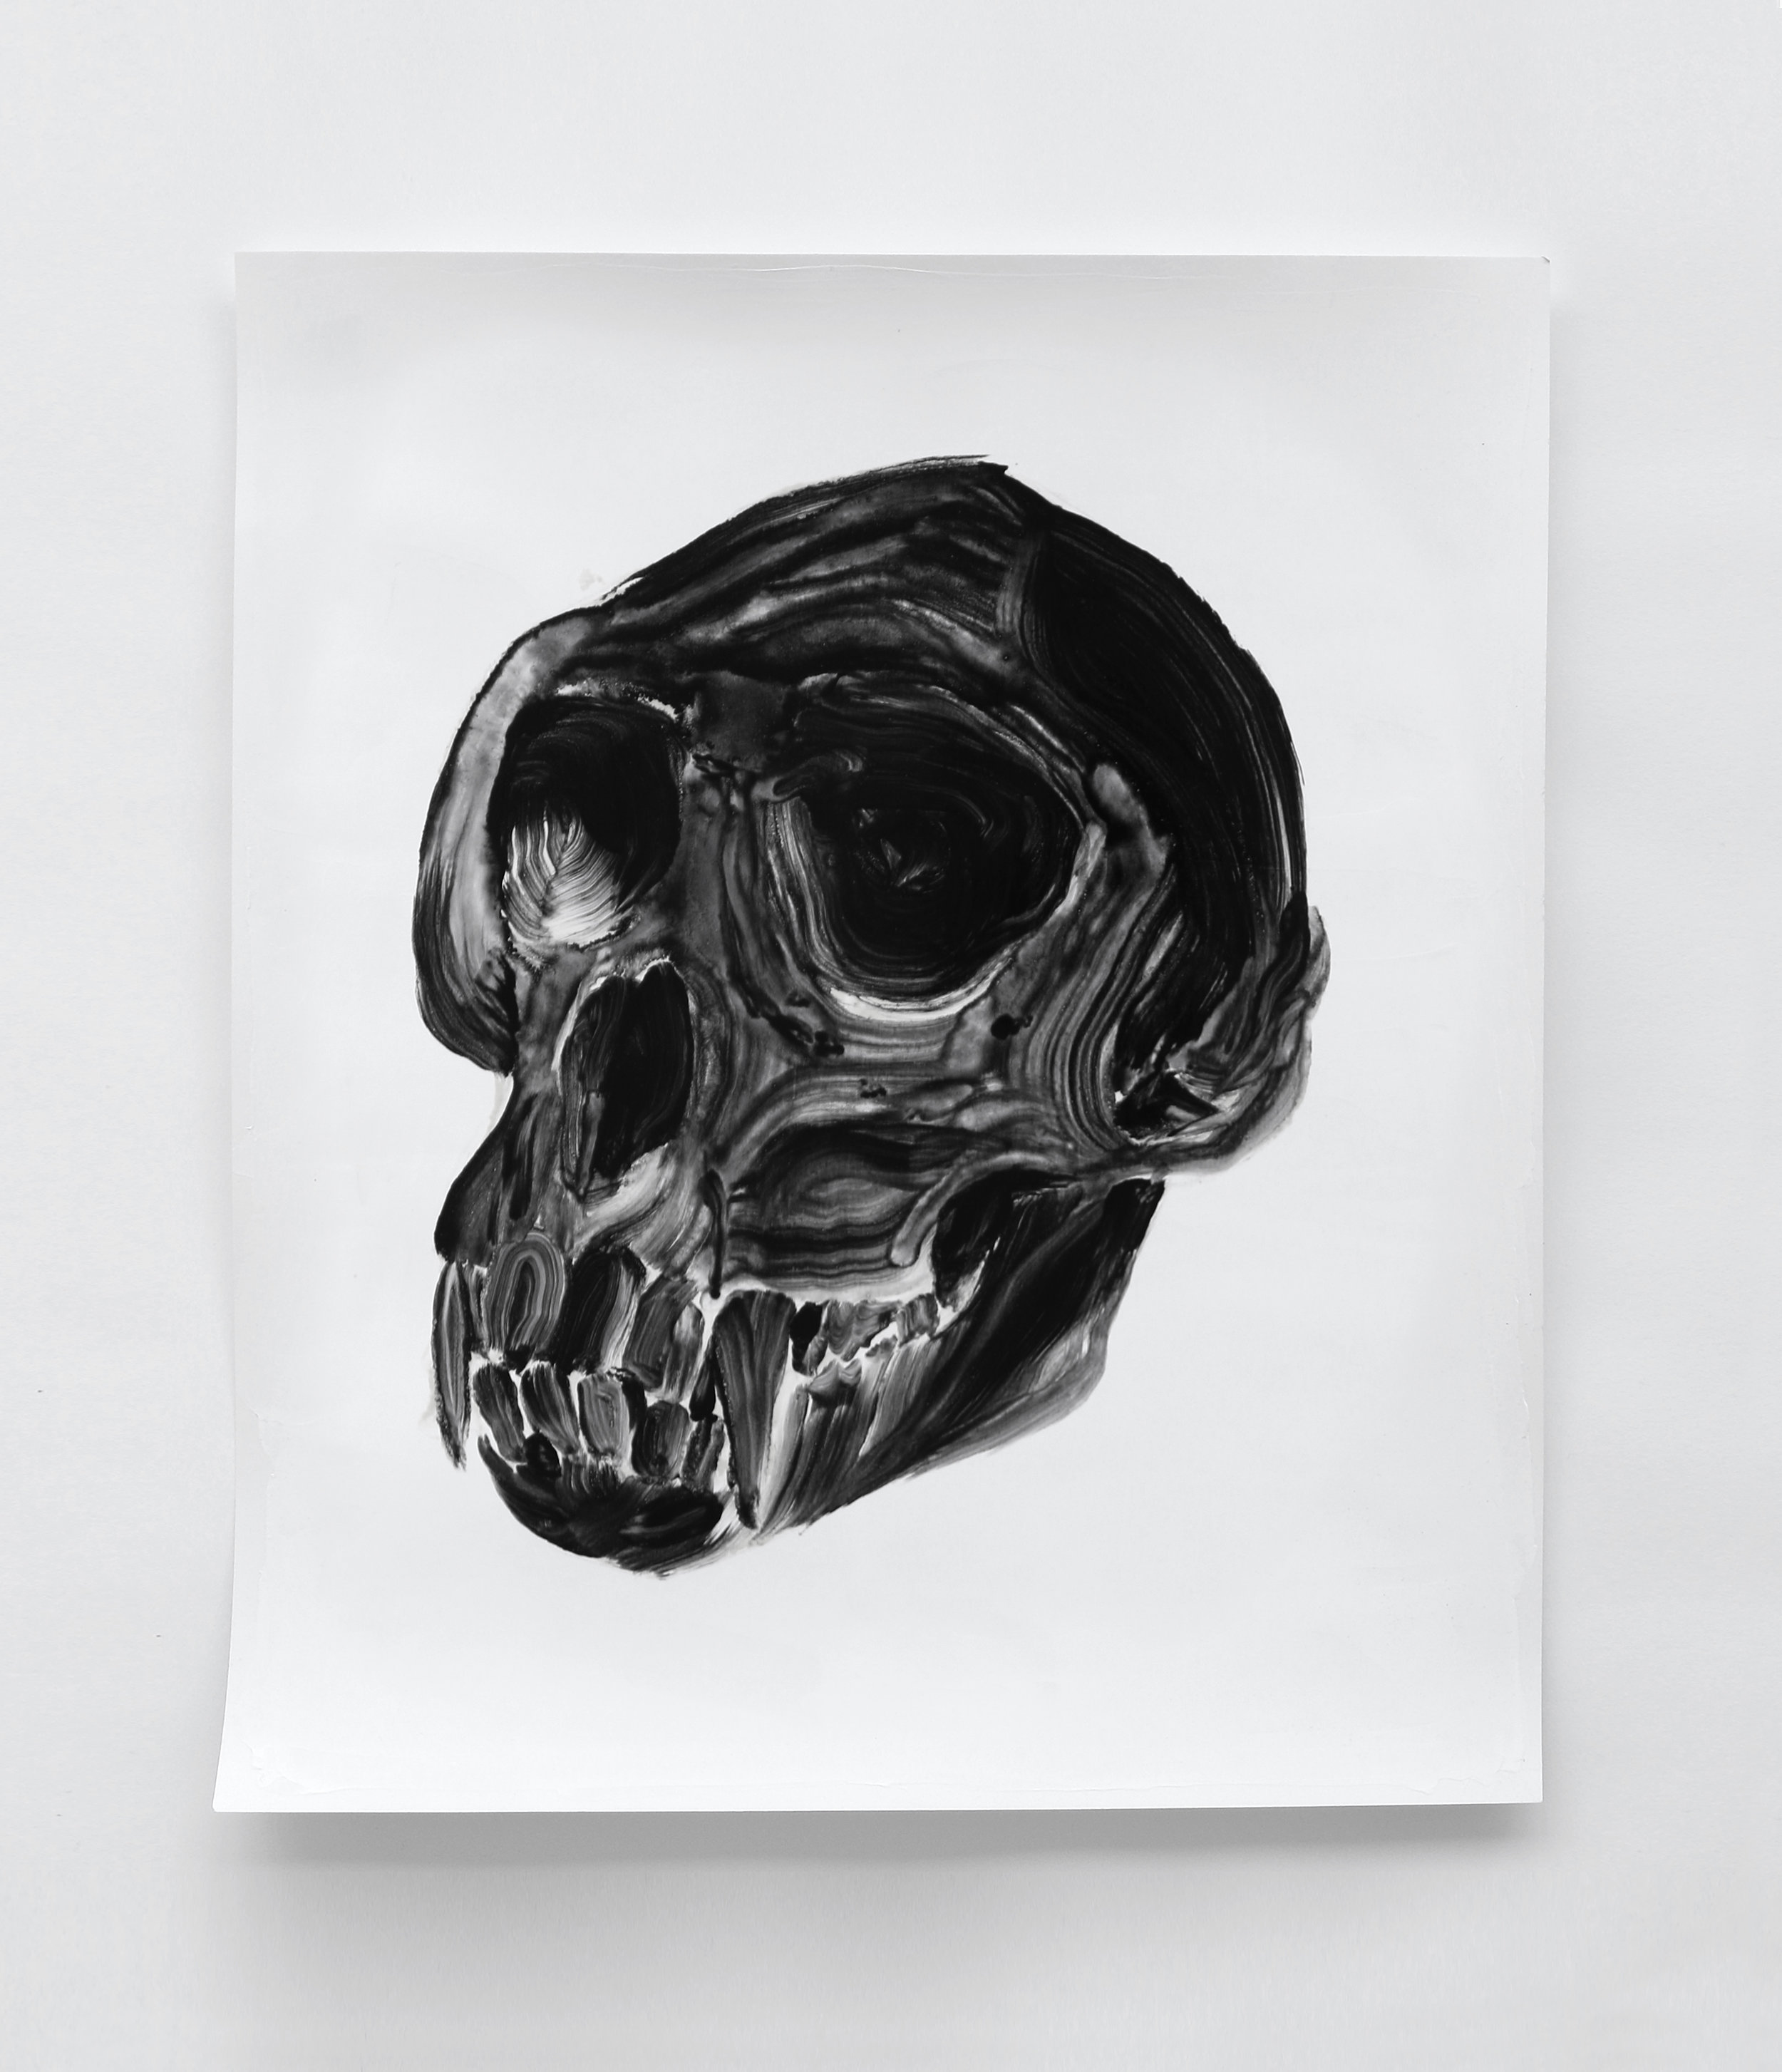  Crâne de singe vervet / Vervet skull  Huile sur papier / Oil on paper  12 X 16 in / 30 X 40 cm    